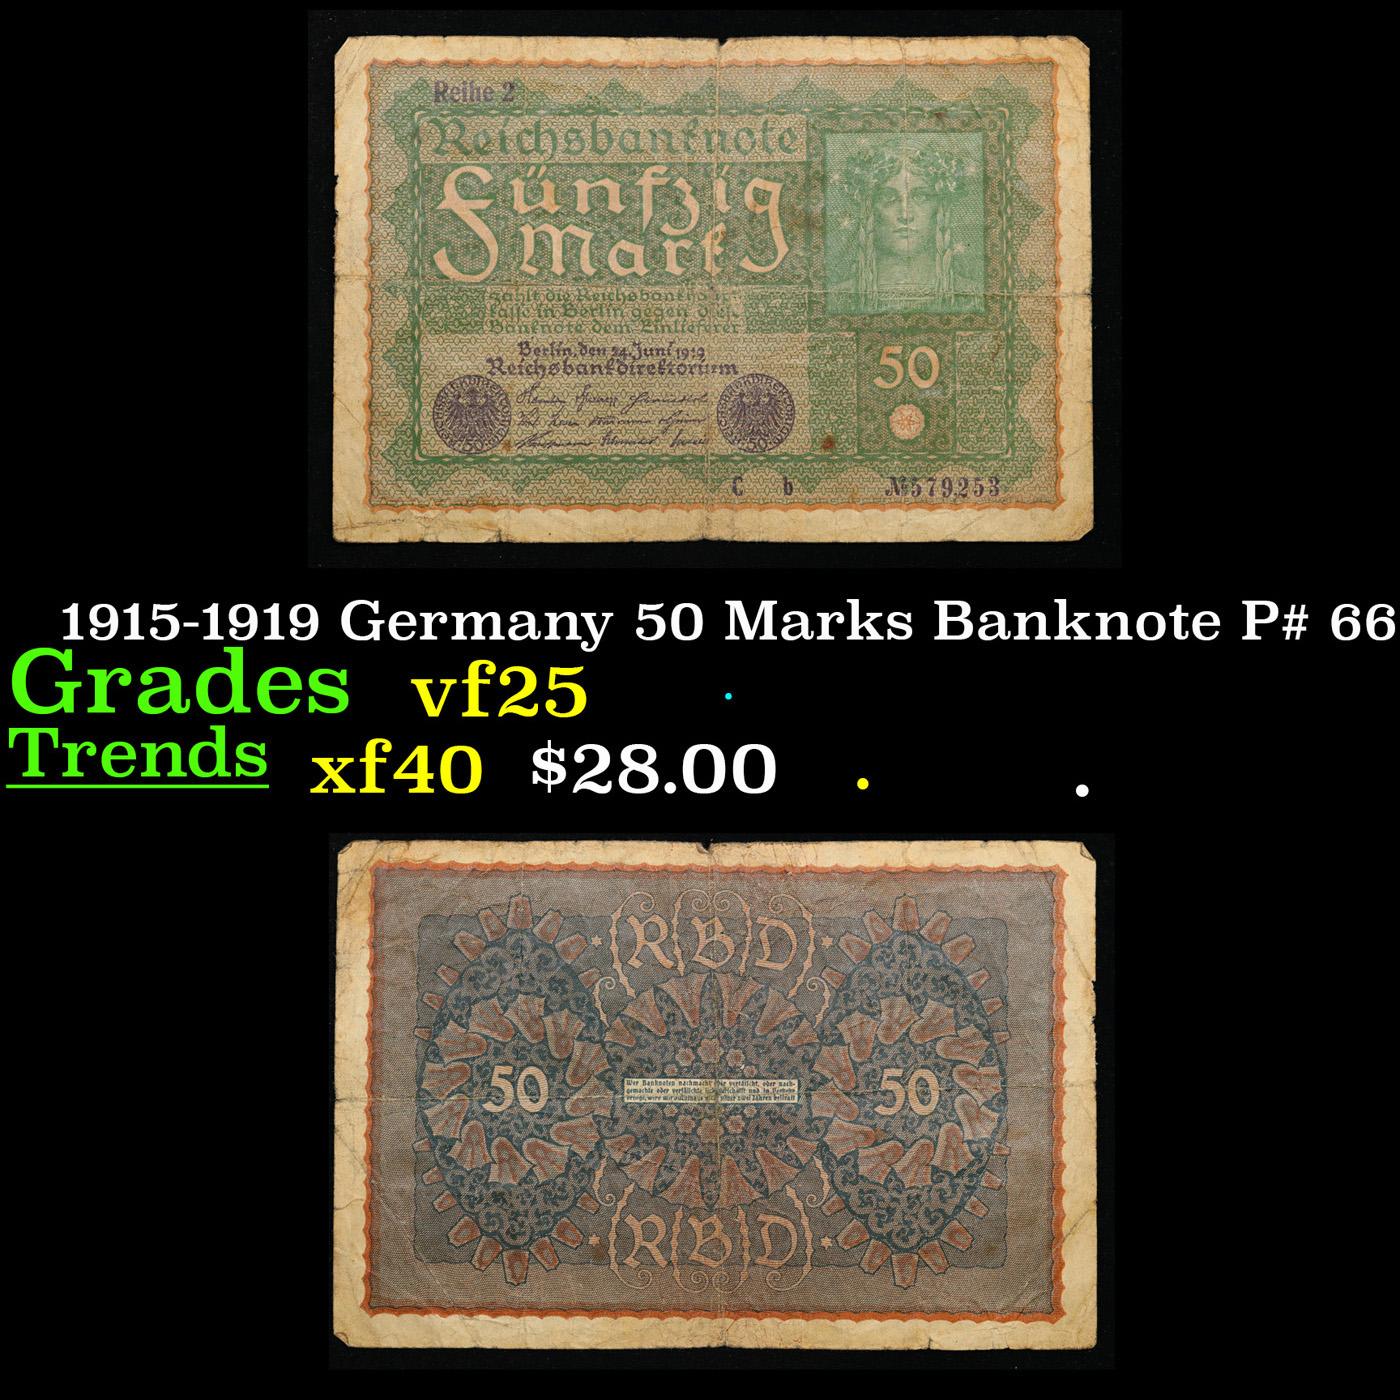 1915-1919 Germany 50 Marks Banknote P# 66 Grades vf+